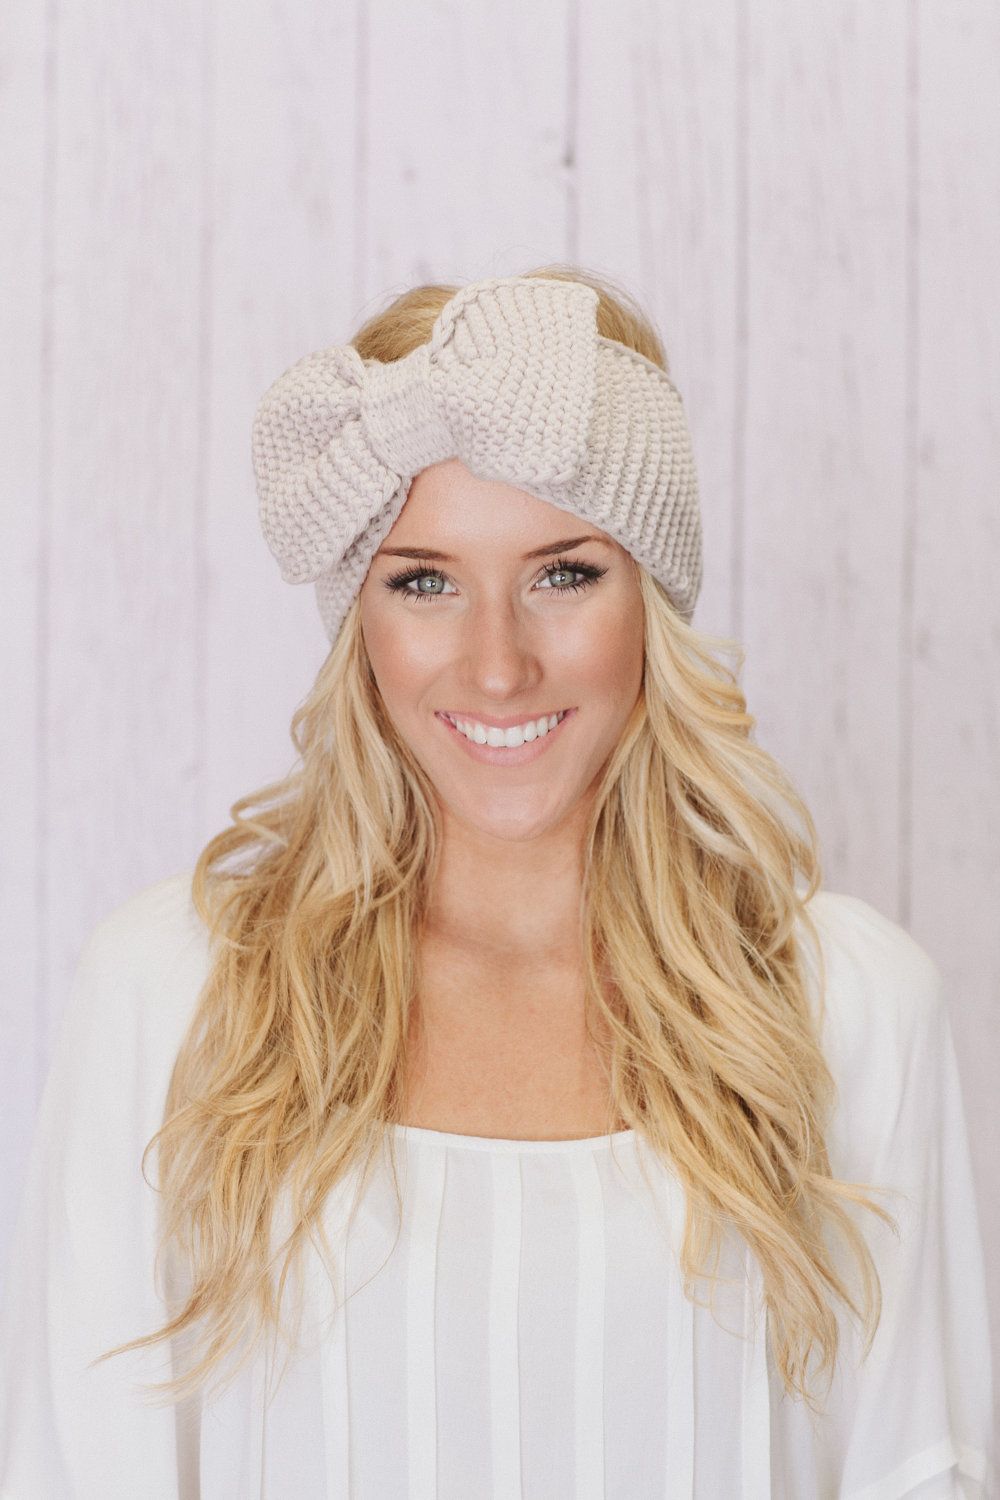 Cute headband for fall/winter!